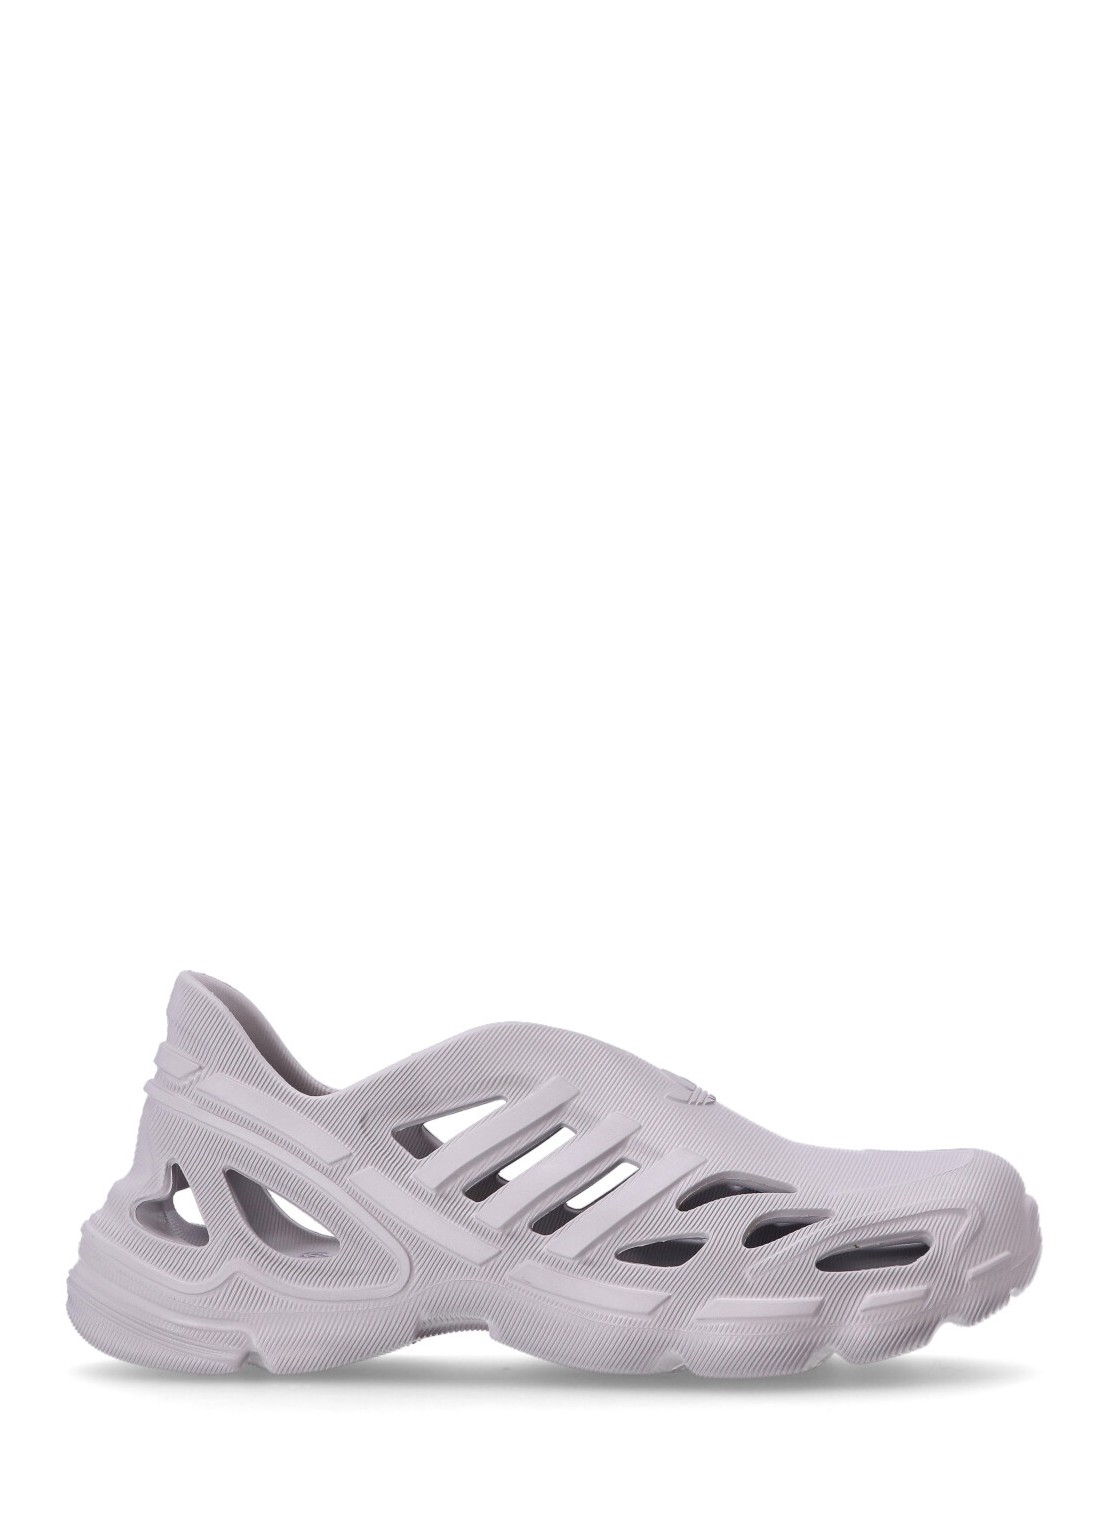 Sneaker adidas originals sneaker man adifom supernova if3914 gretwo gretwo gretwo talla gris
 